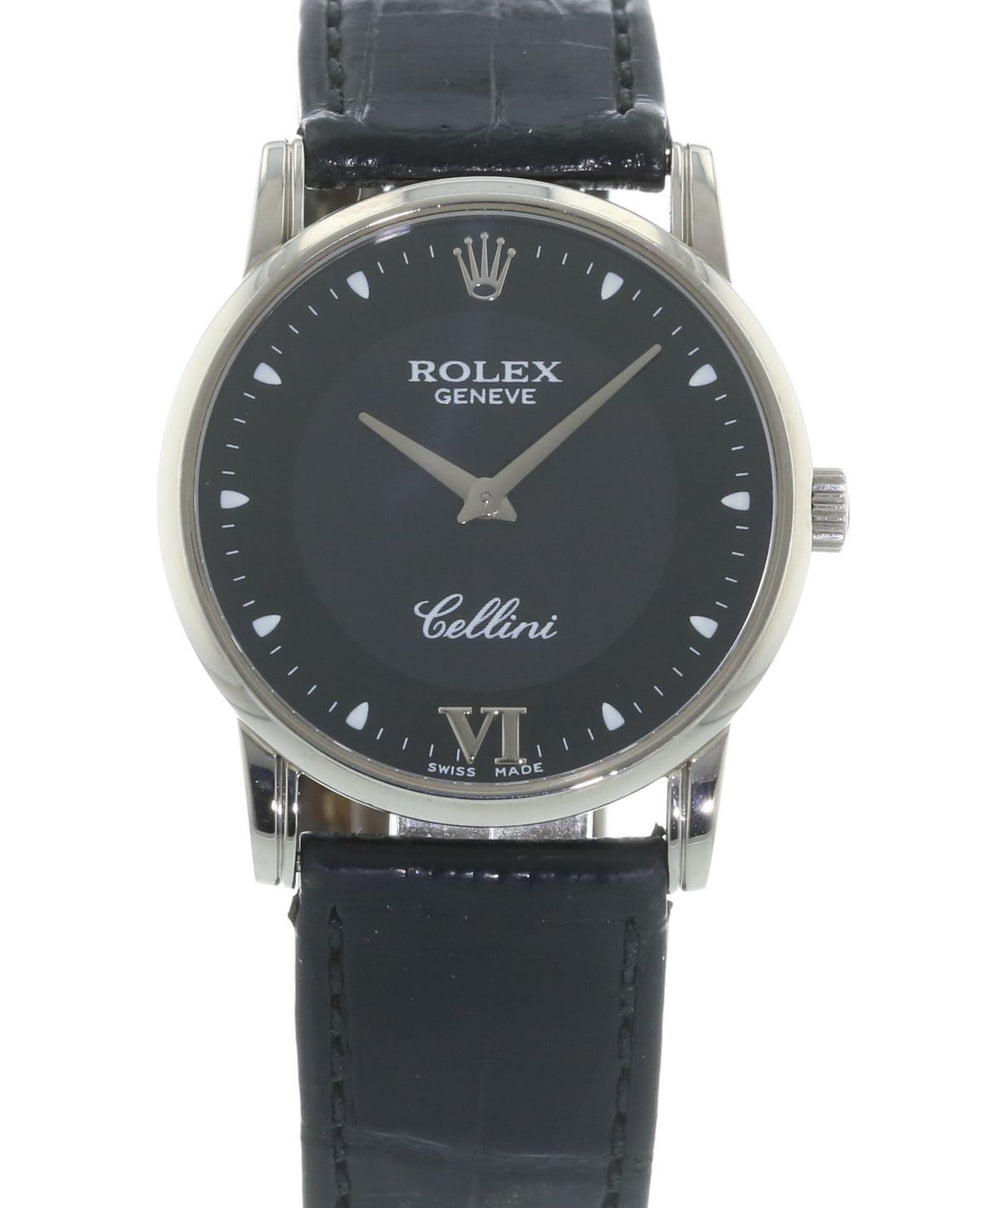 Rolex Cellini 5116 1